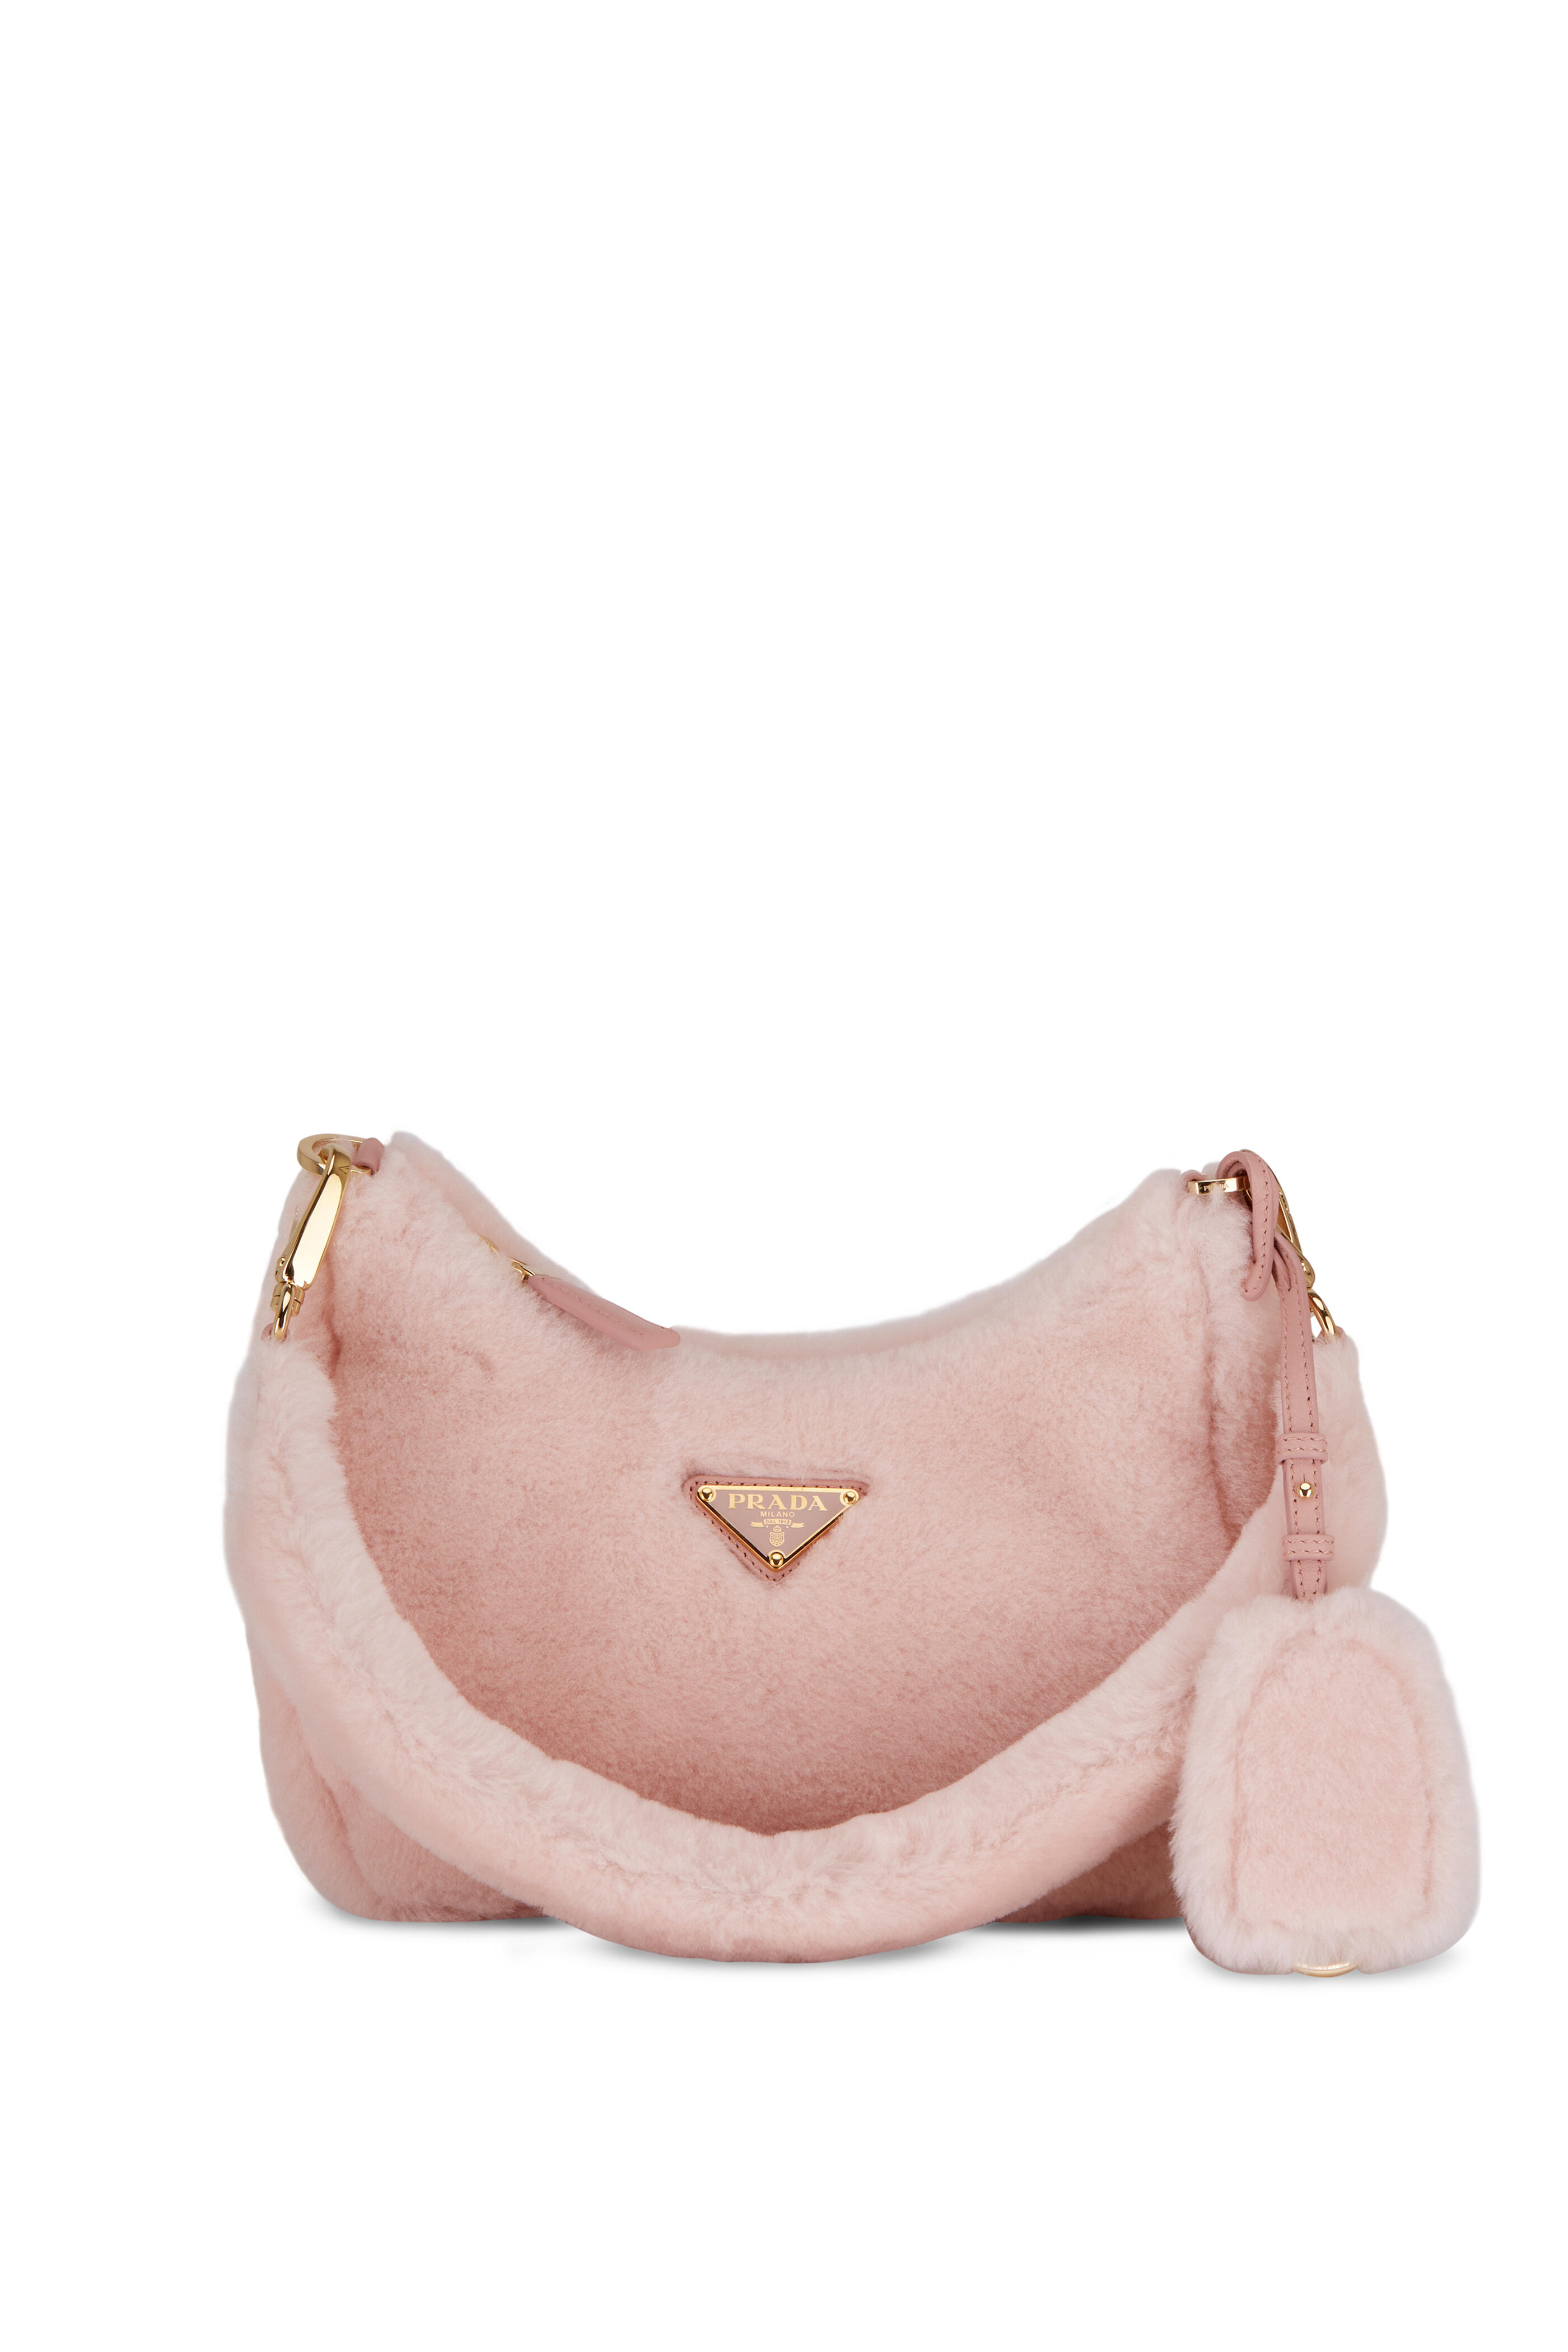 Prada Pink Leather Handbag